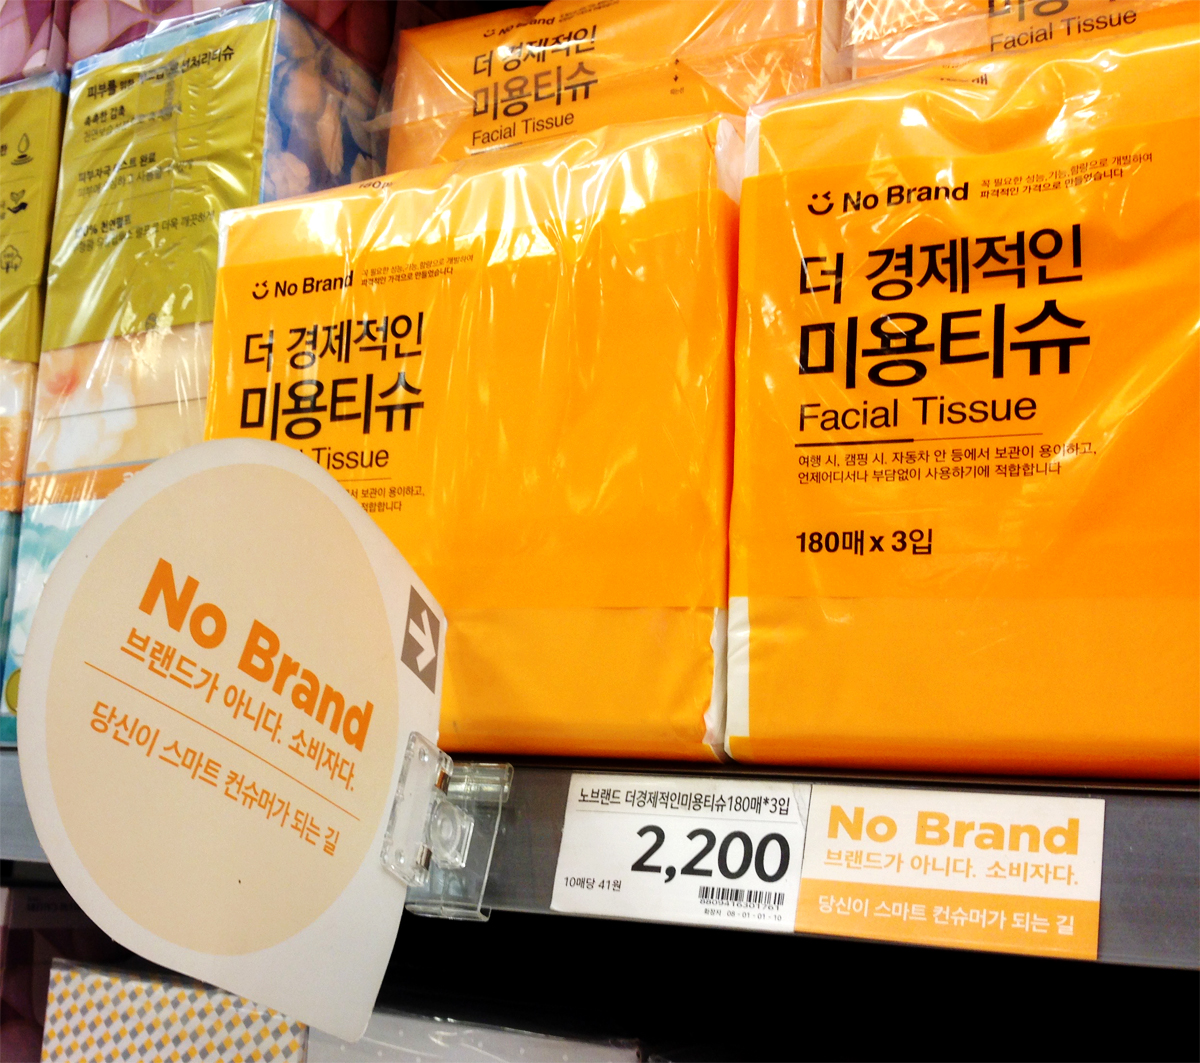 No Brand tissue